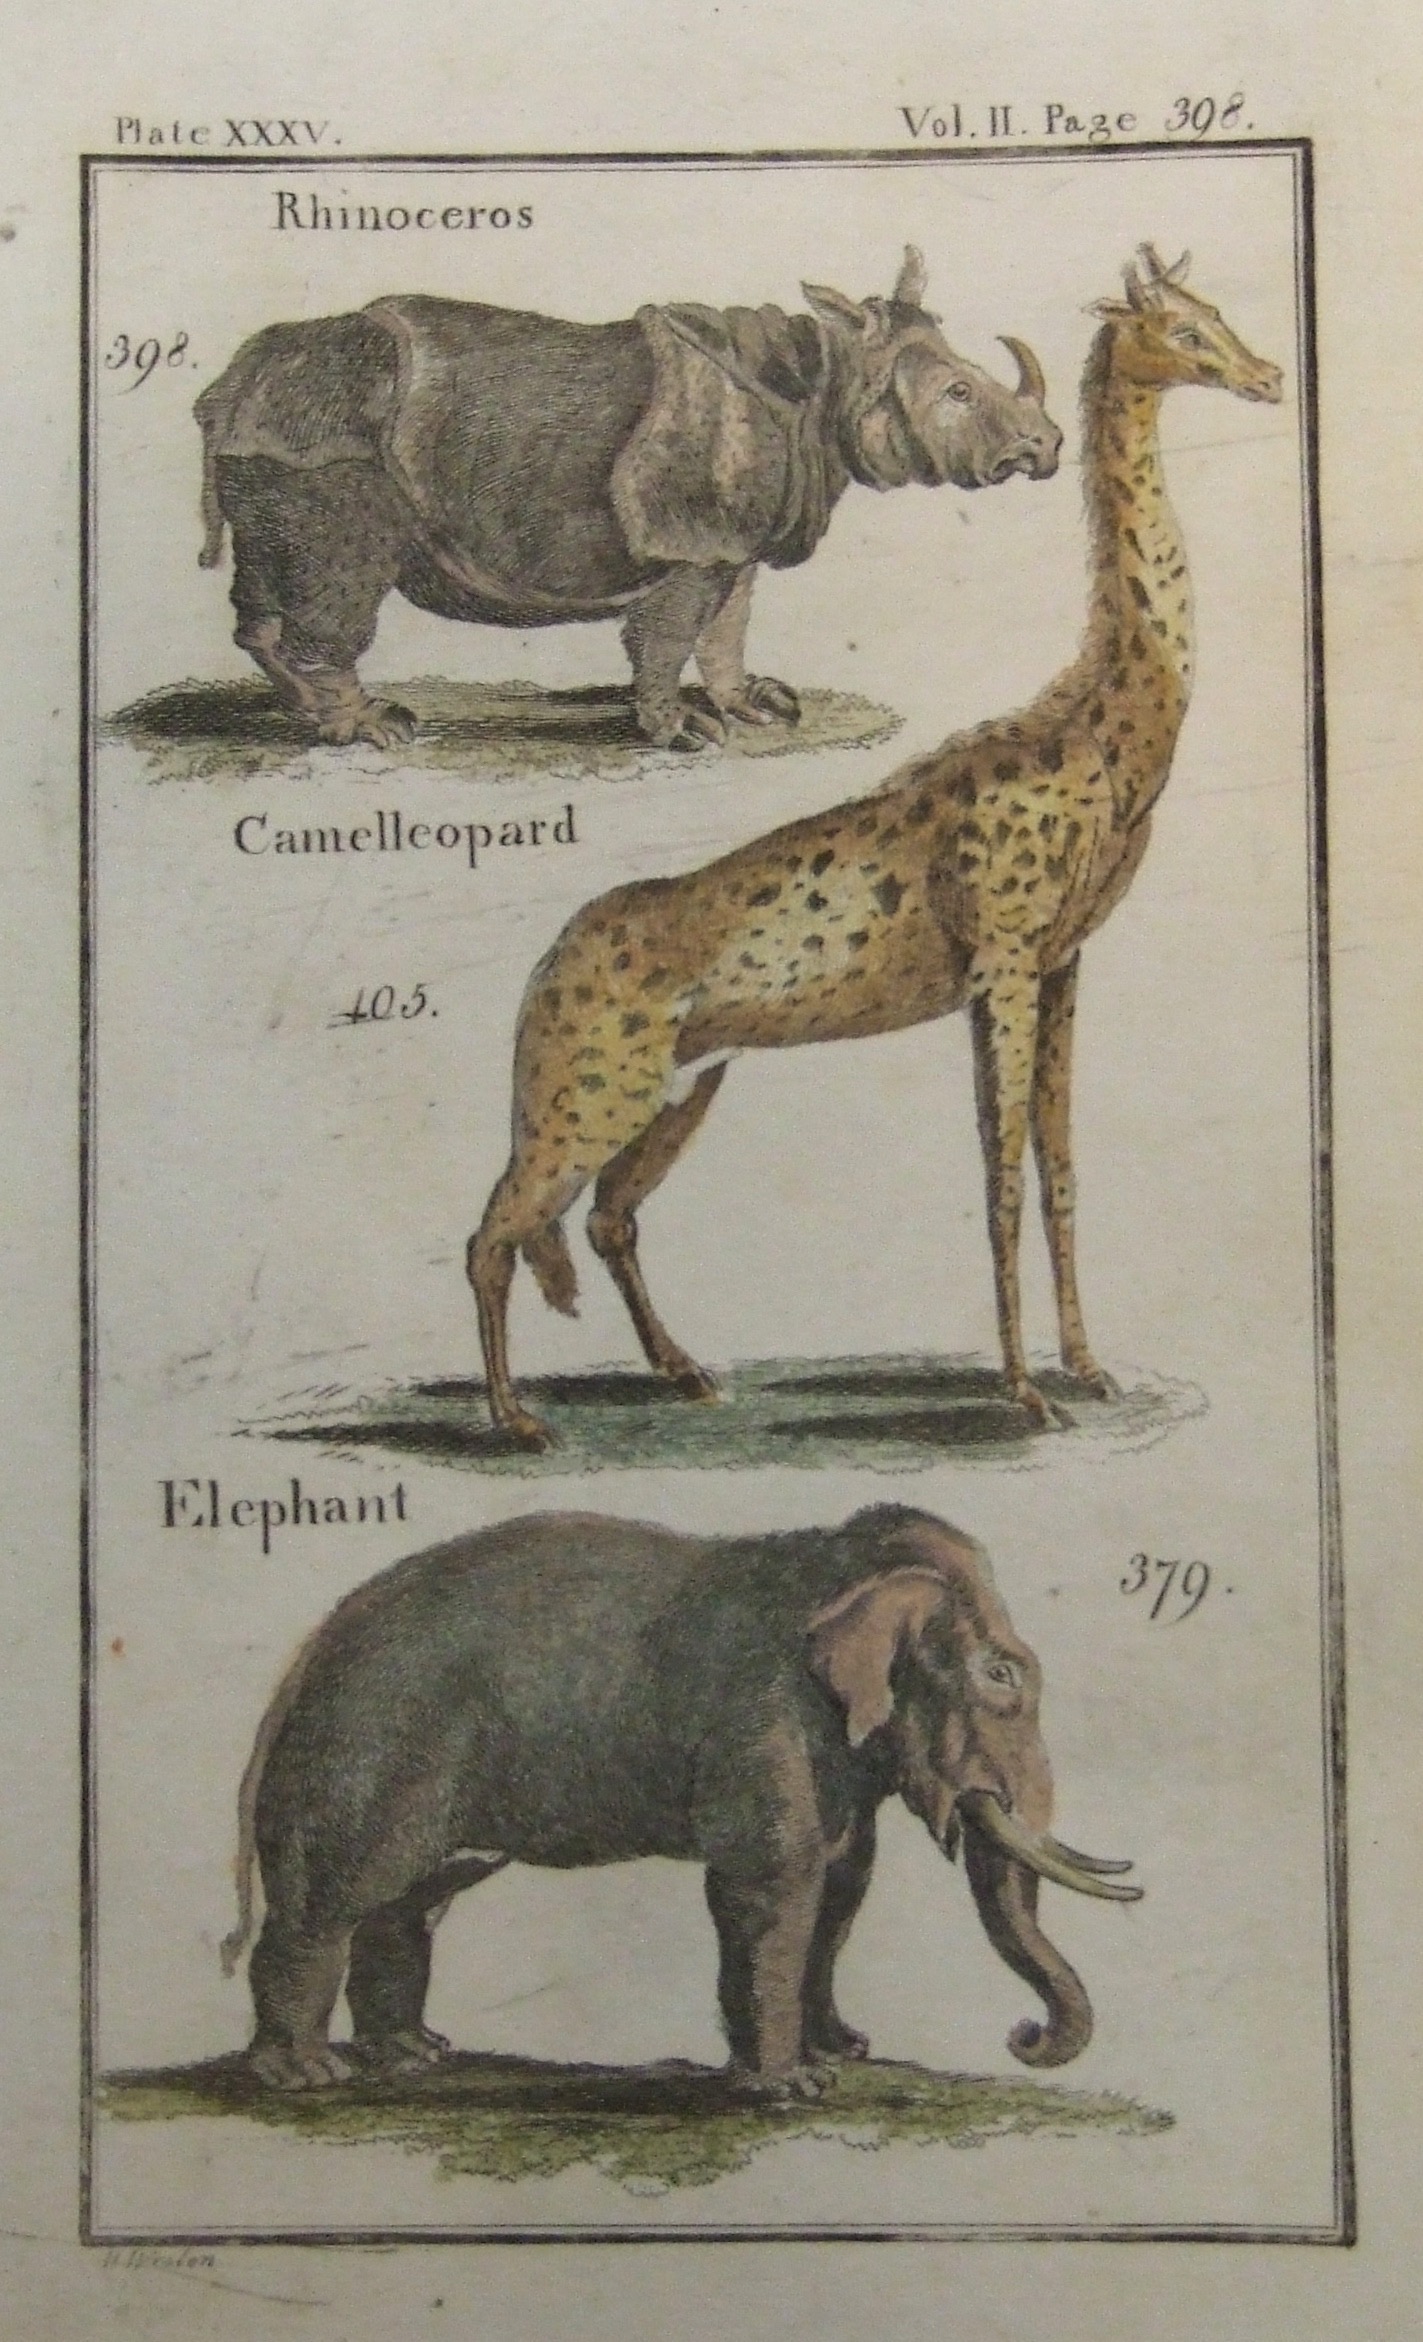 Rhinoceros, Giraffe (Camelleopard), Elephant